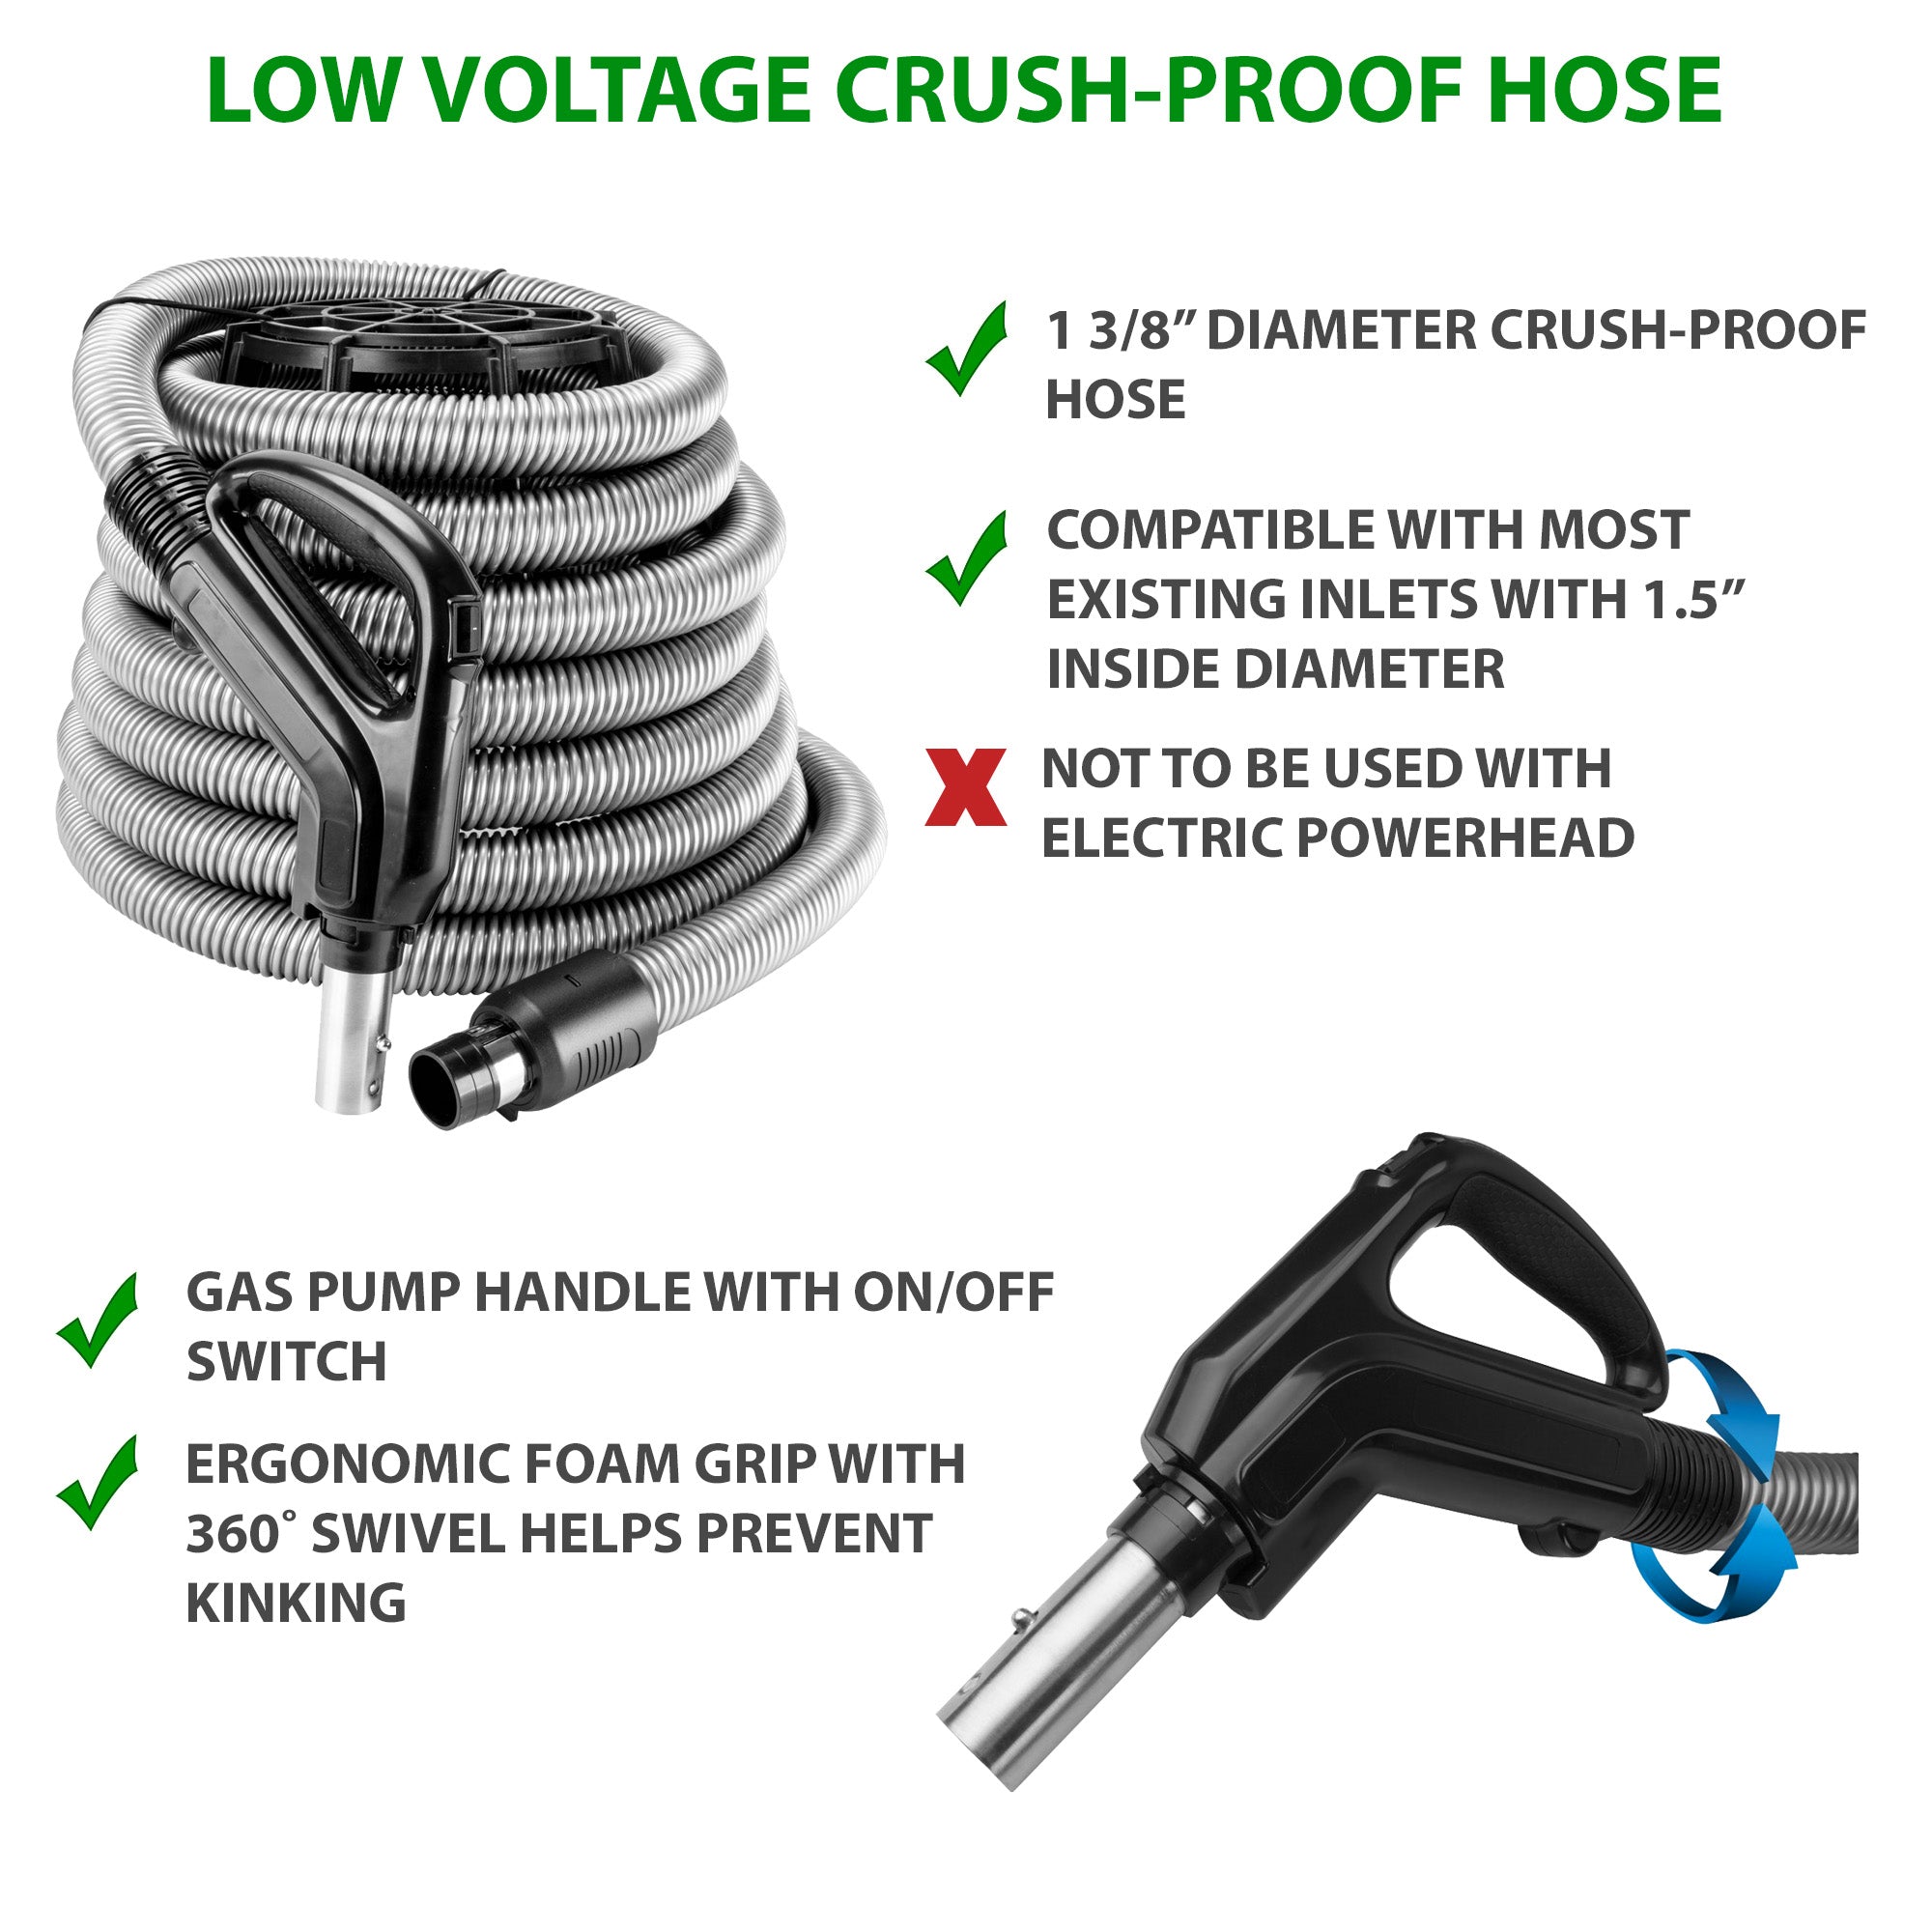 Low Voltage Crush-Proof Hose with Ergonomic Foam Grip 